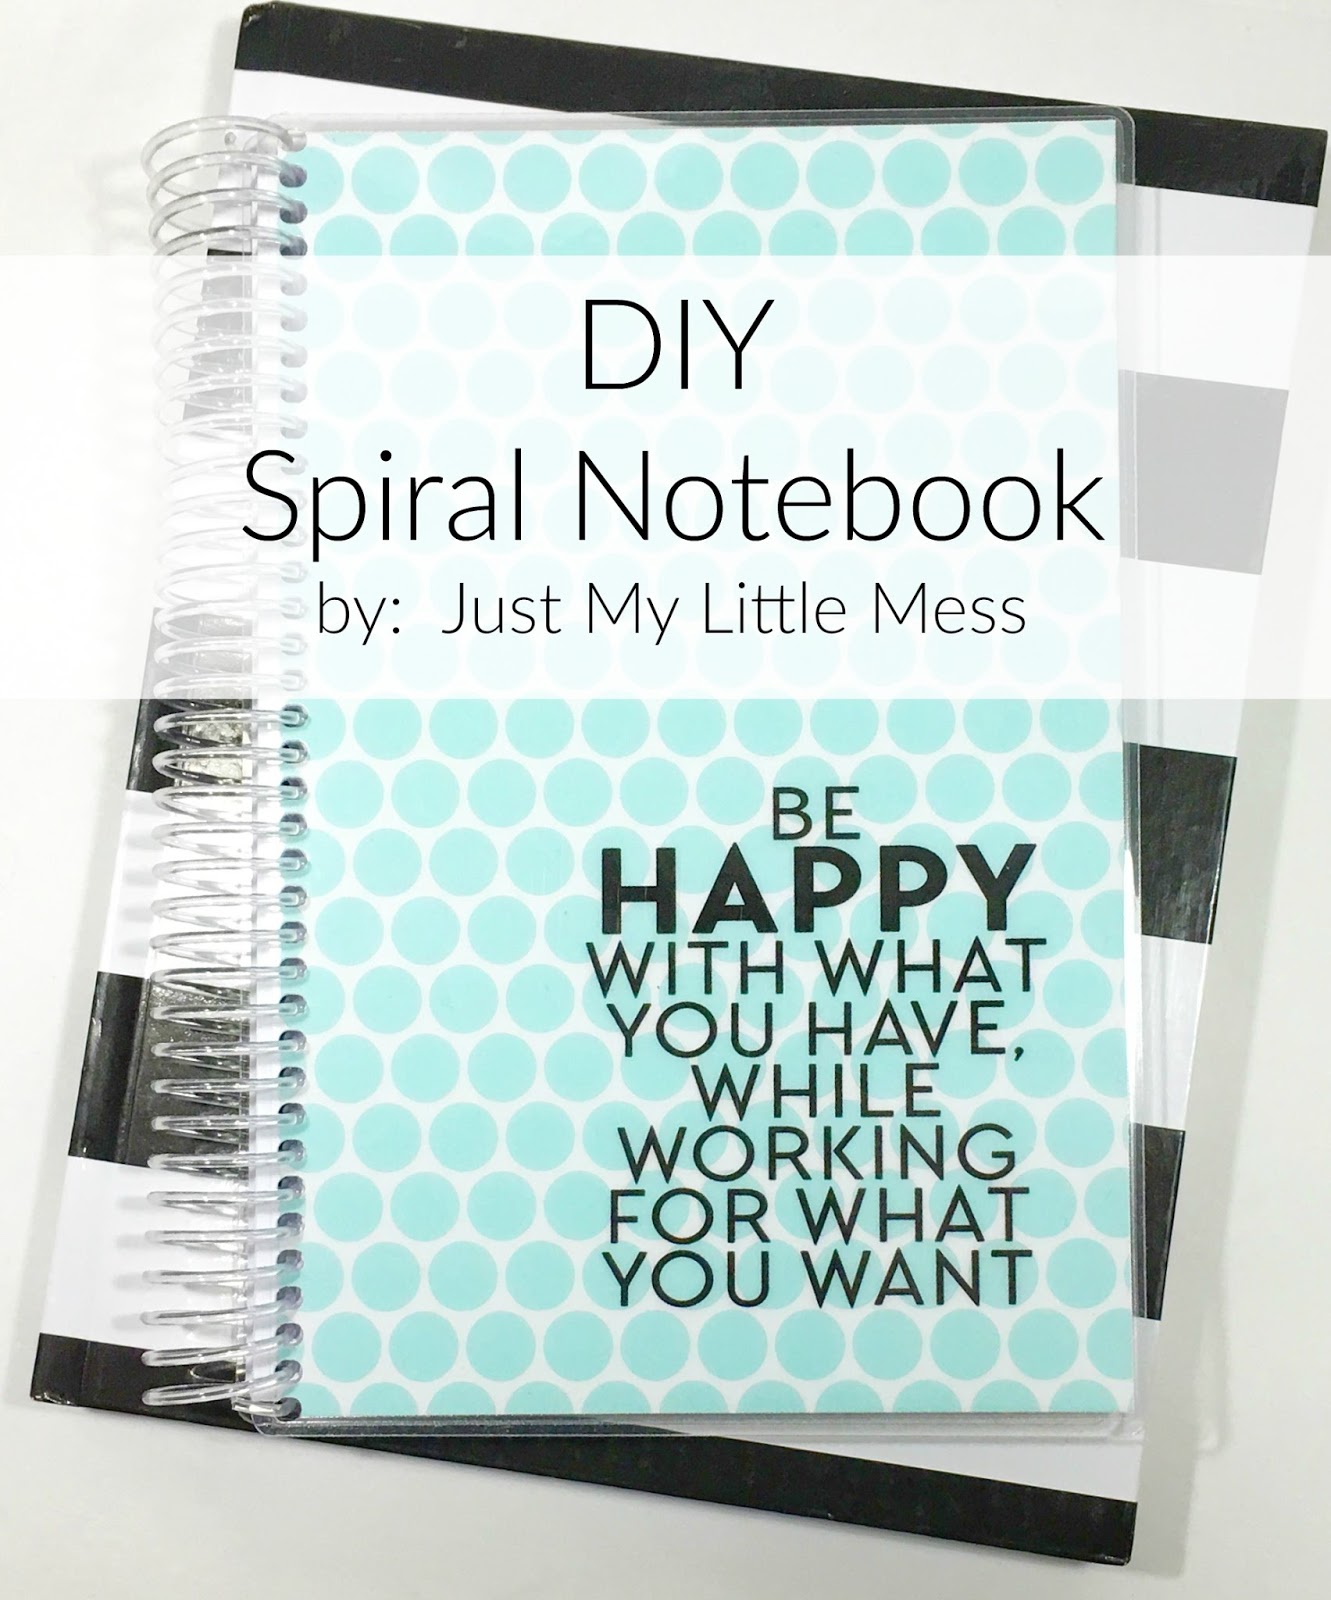 DIY Sprial Notebook